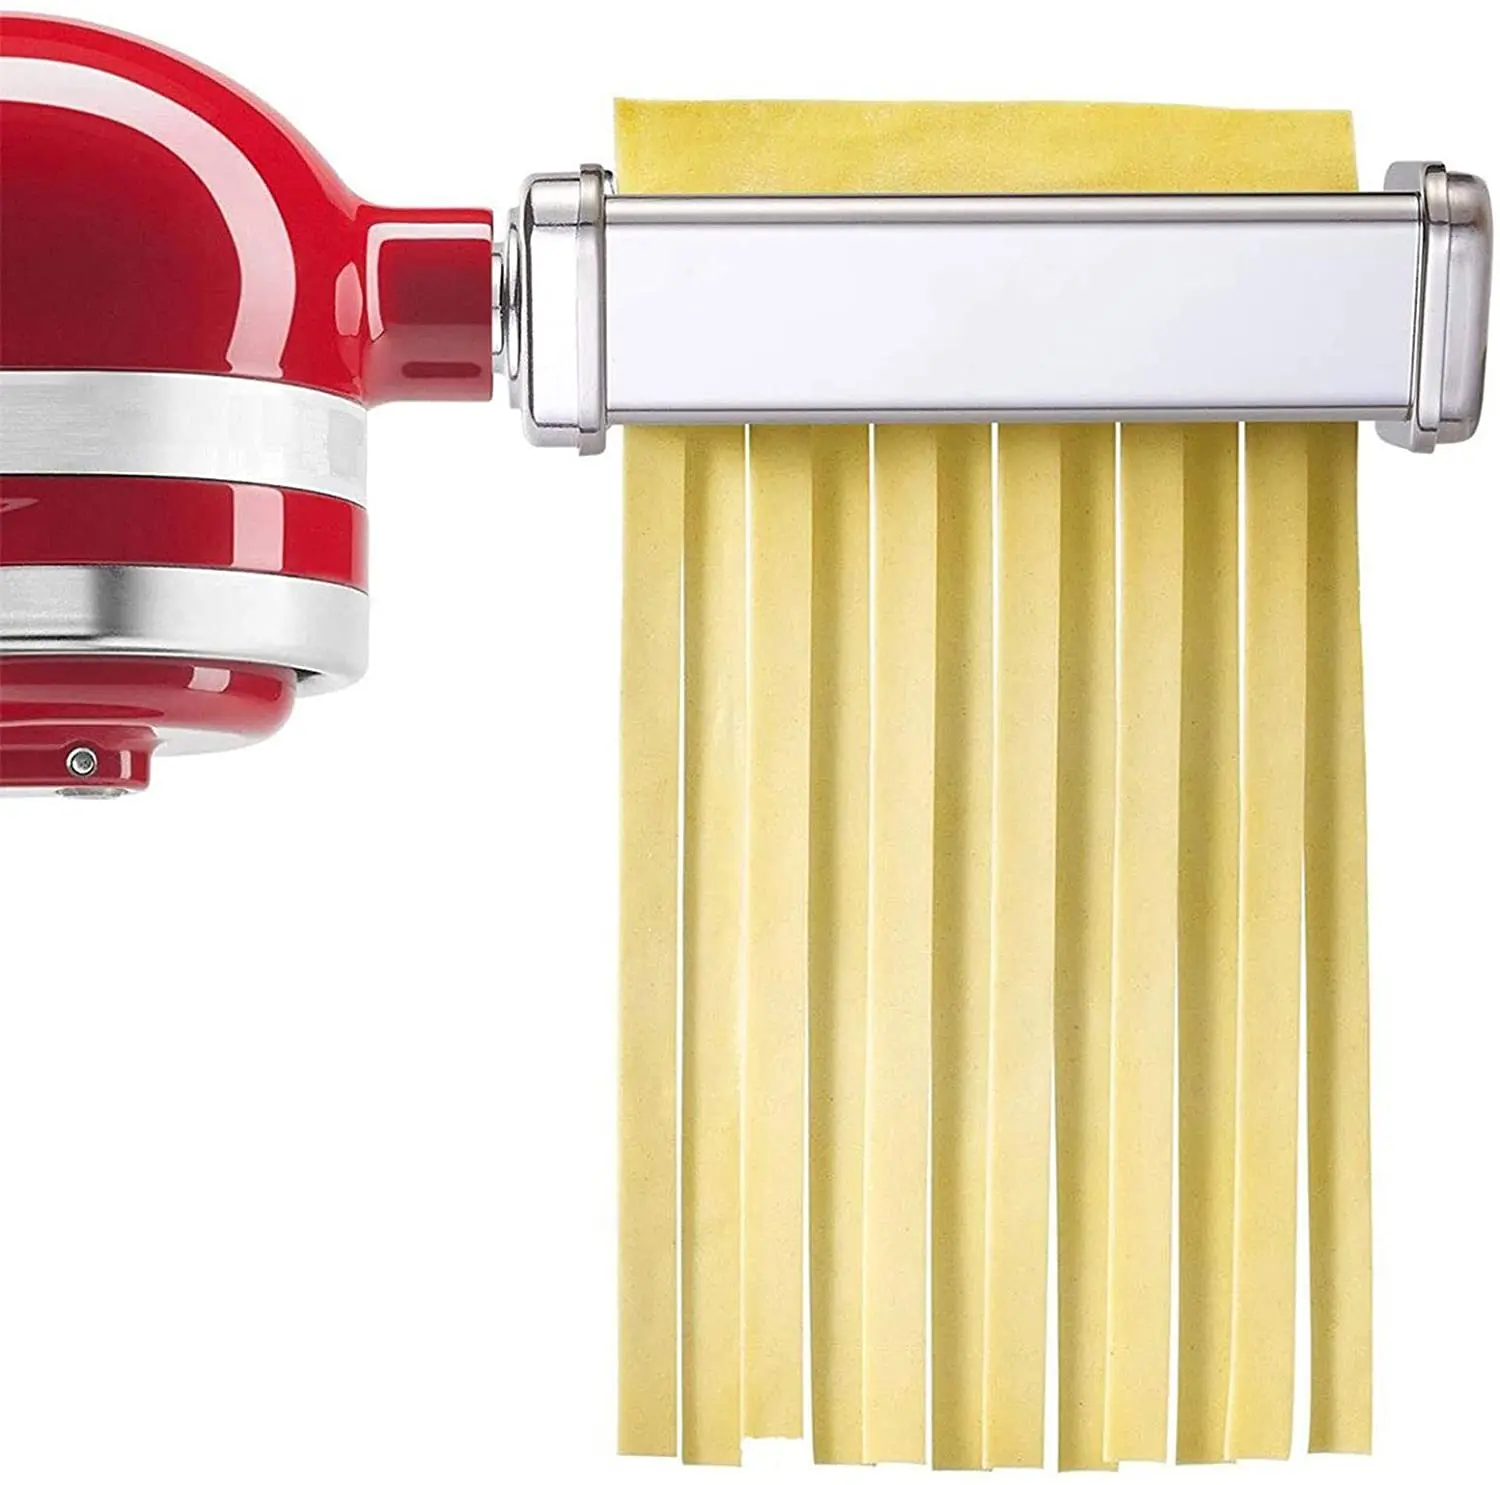 InnoMoon Pasta Maker Attachment for KitchenAid Mixer 3 in 1 Set,Pasta Maker Attachments  Set for all KitchenAid Stand Mixer, including Pasta Sheet Roller, Spaghetti  Cutter, Fettuccine Cutter 